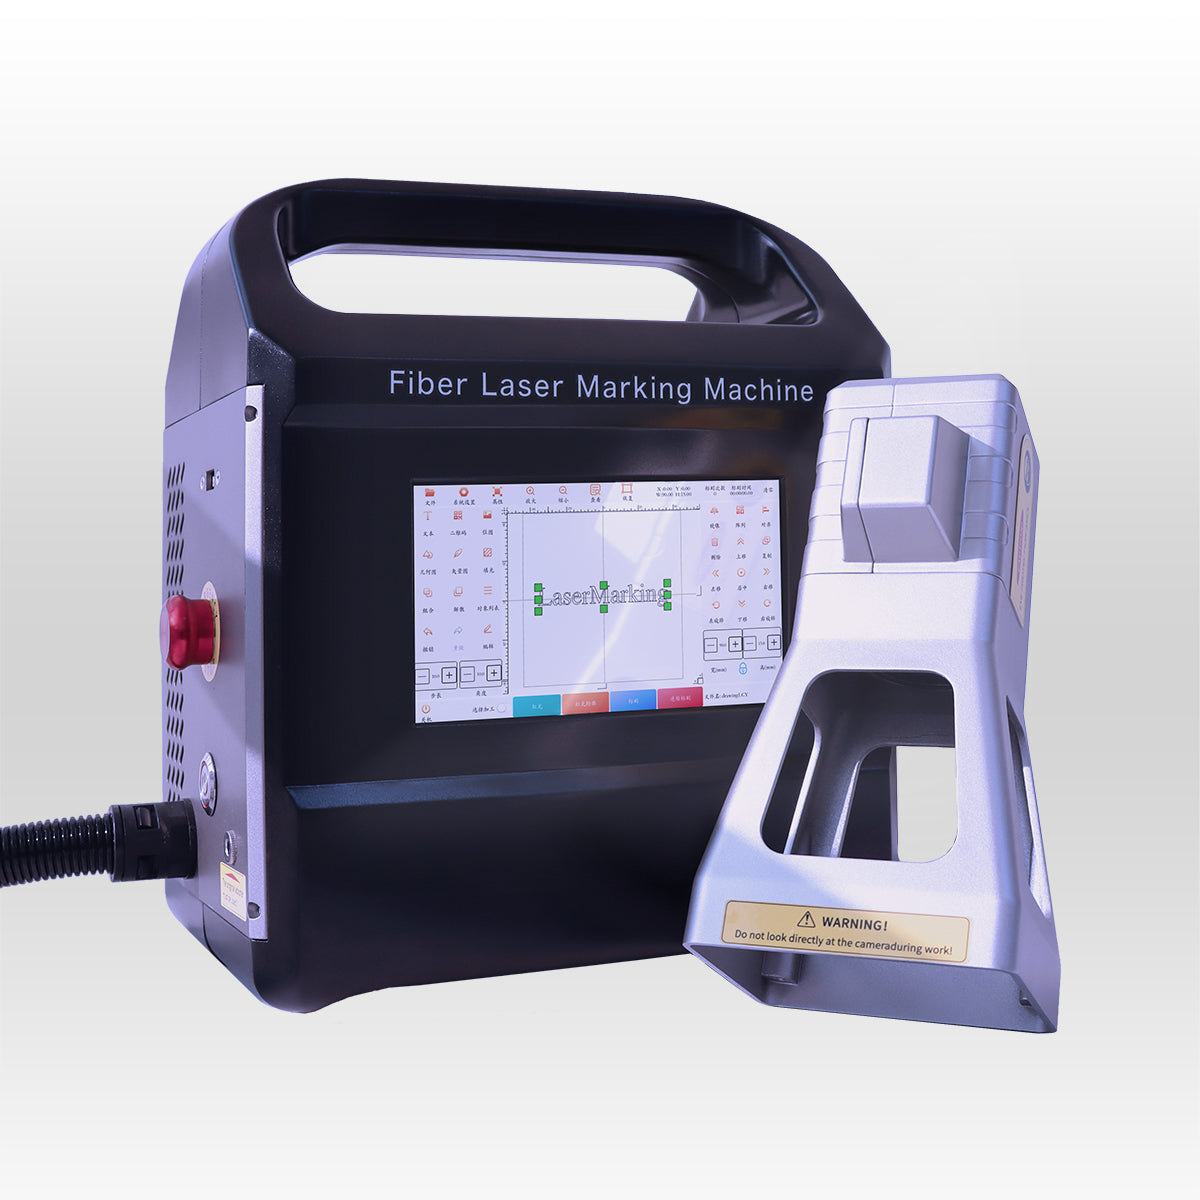 Fiber optic metal laser engraving machine Industrial machinery parts engraving metal product coding trademark production laser marking equipment